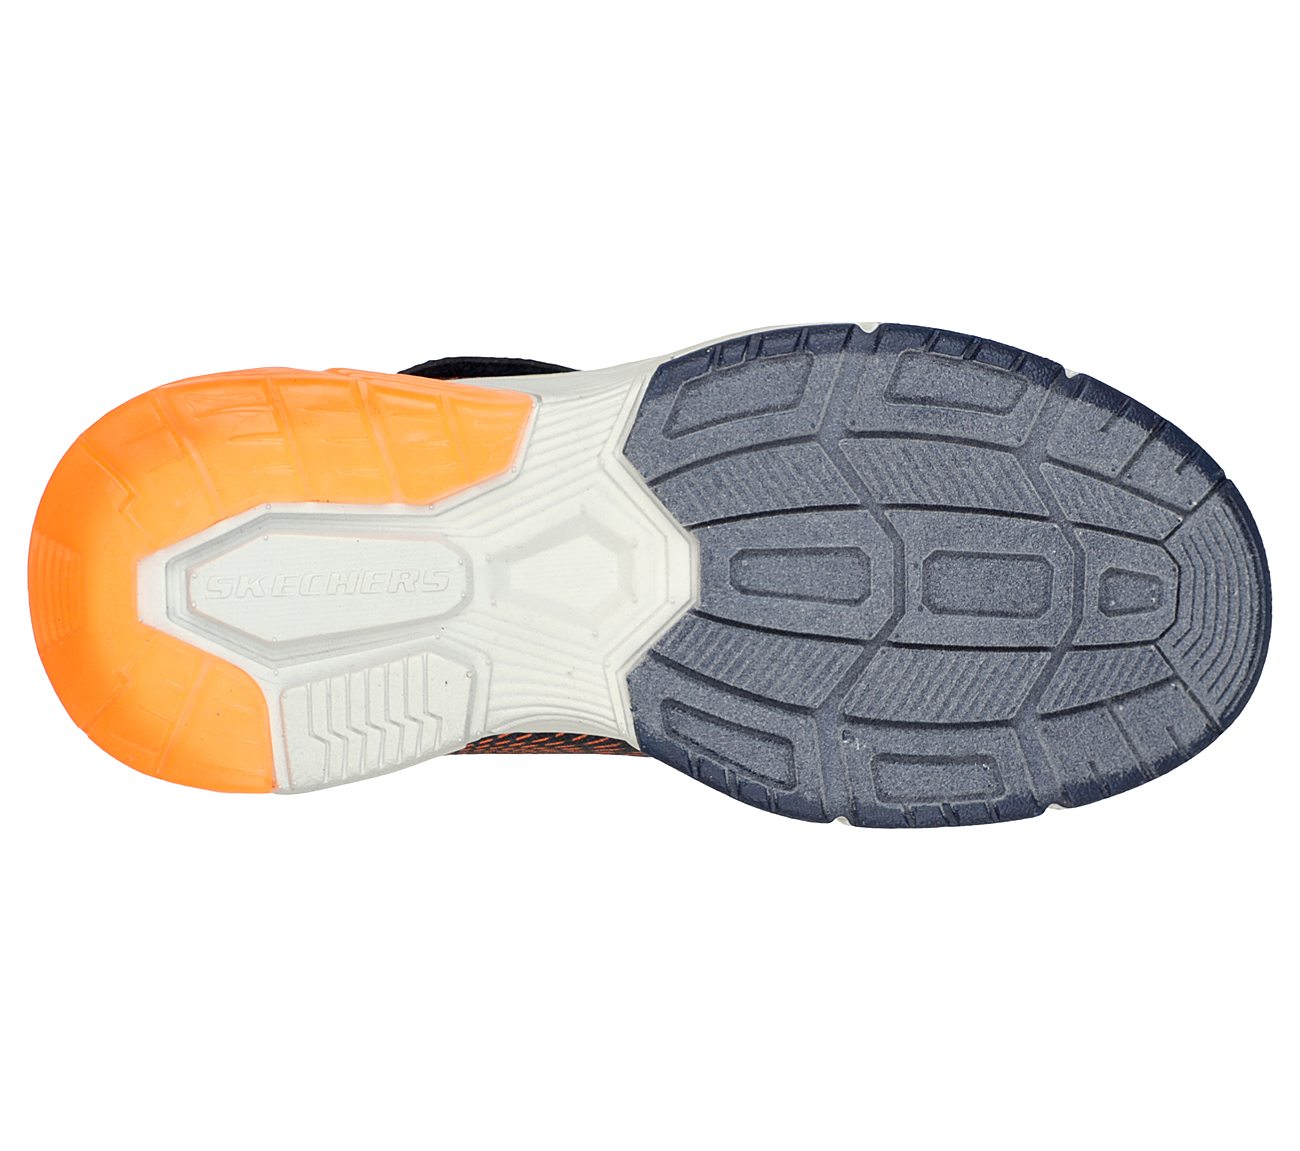 THERMOFLUX 2.0 - KODRON, NAVY/ORANGE Footwear Bottom View